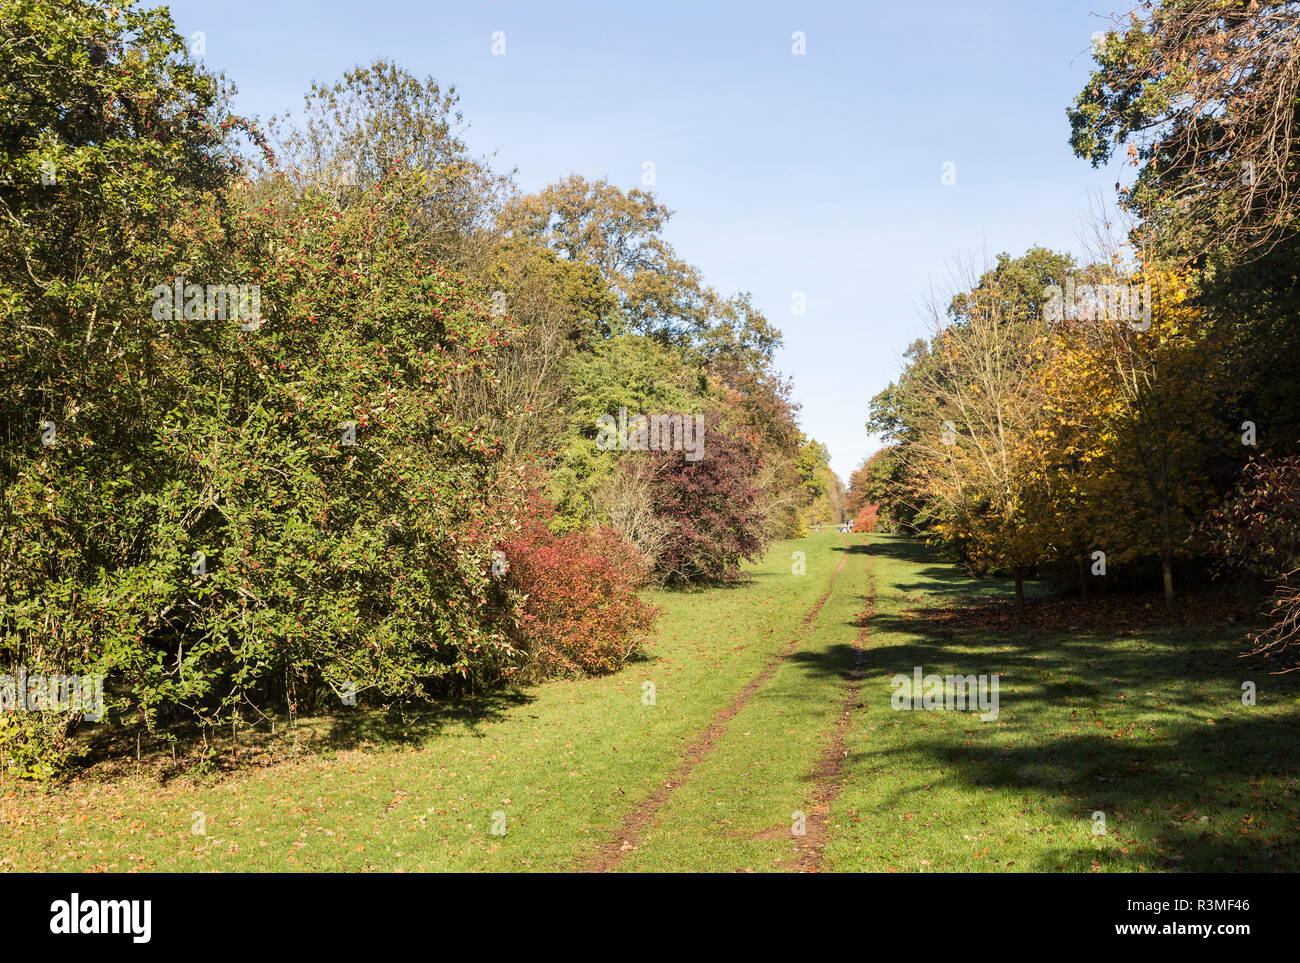 Pathway through National arboretum, Westonbirt arboretum, Gloucestershire, England, UK Stock Photo